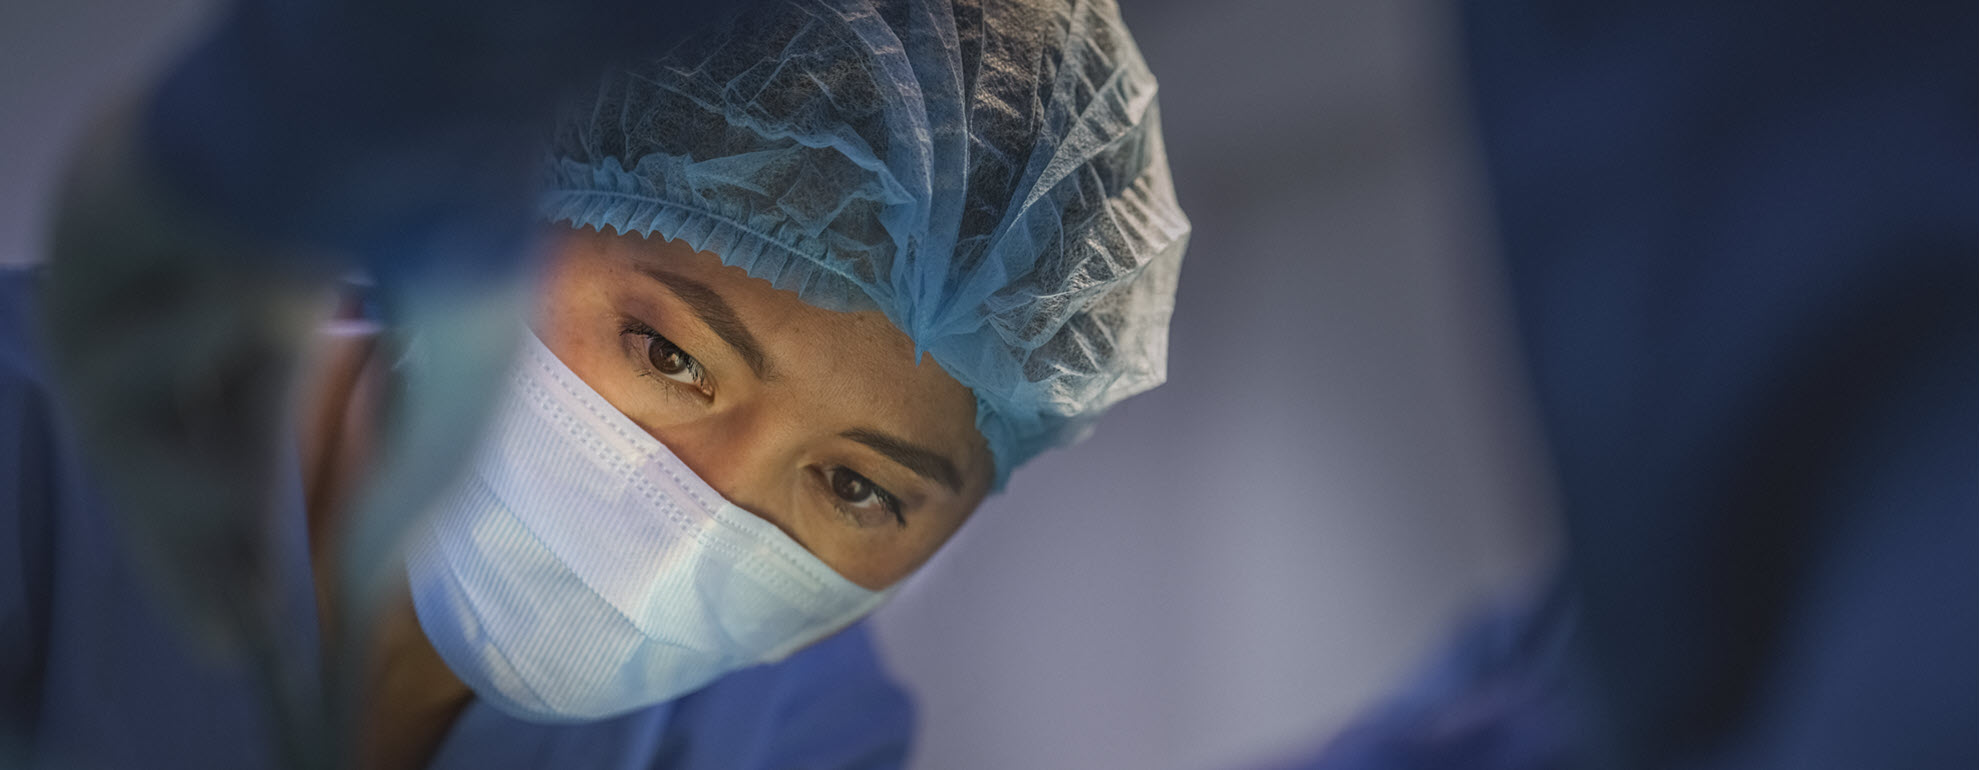 Chirurgen in Operationsraum